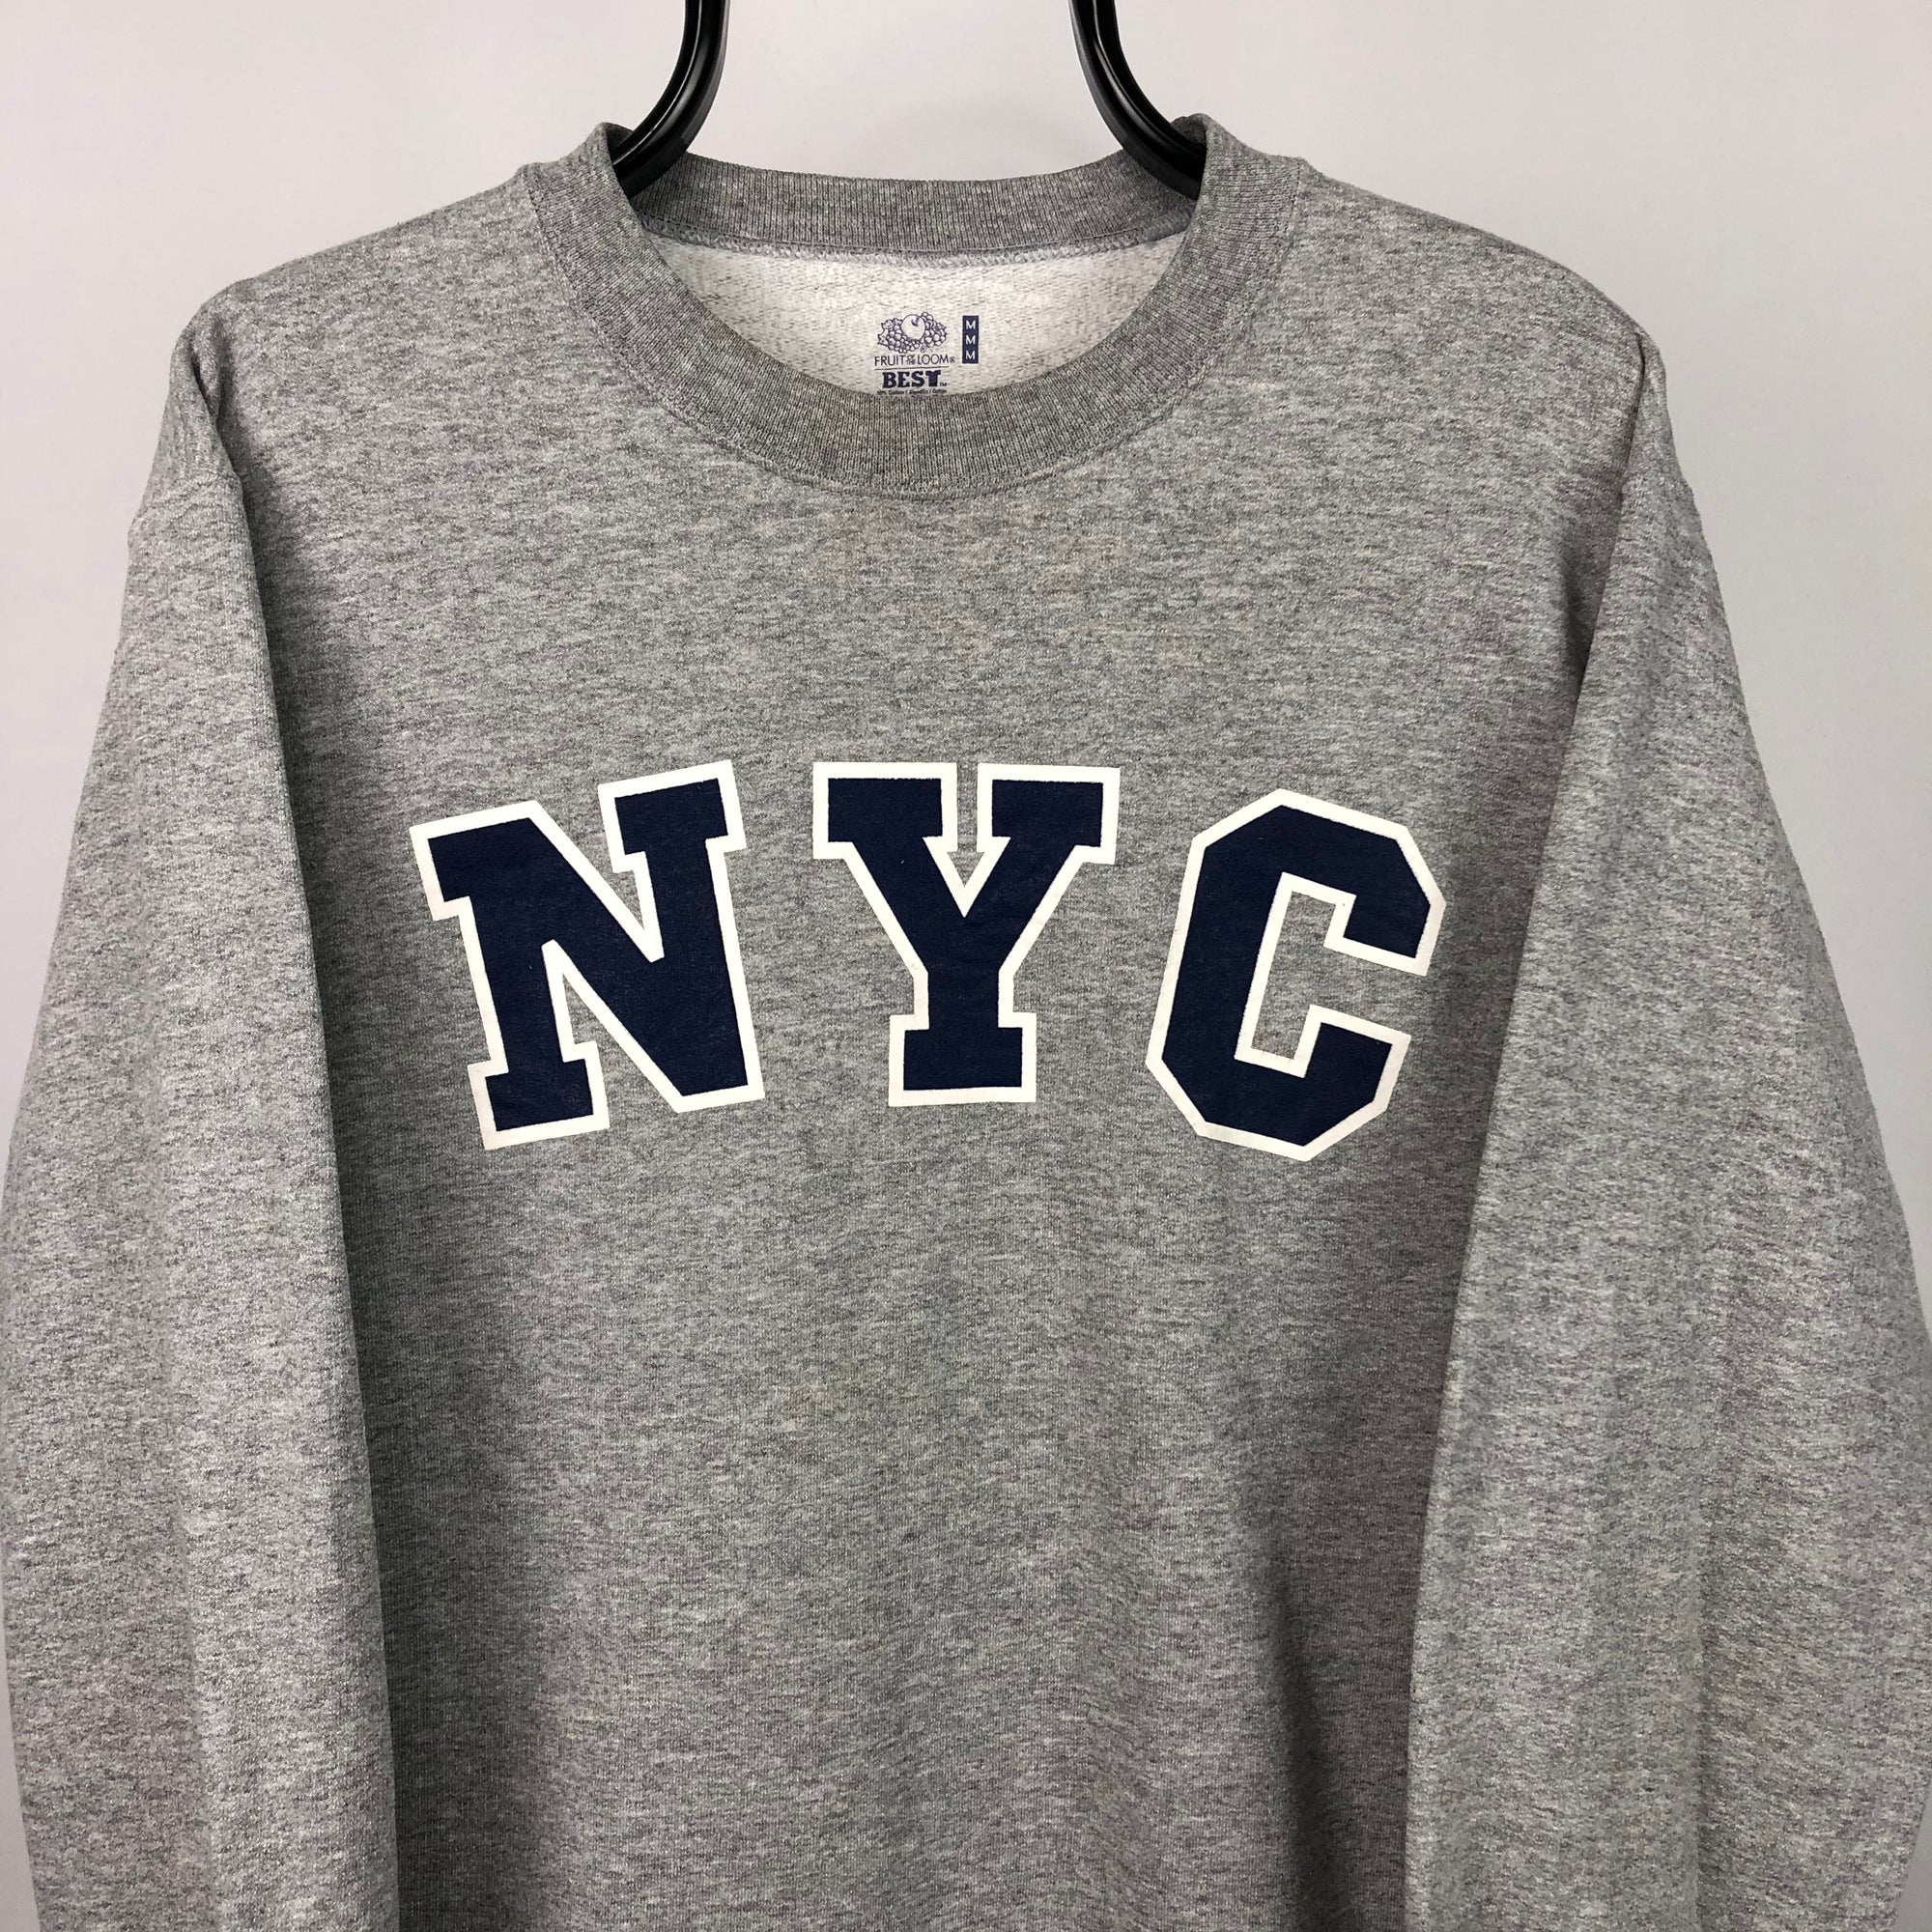 Vintage NYC Sweatshirt in Grey - Men's Small/Women's Medium